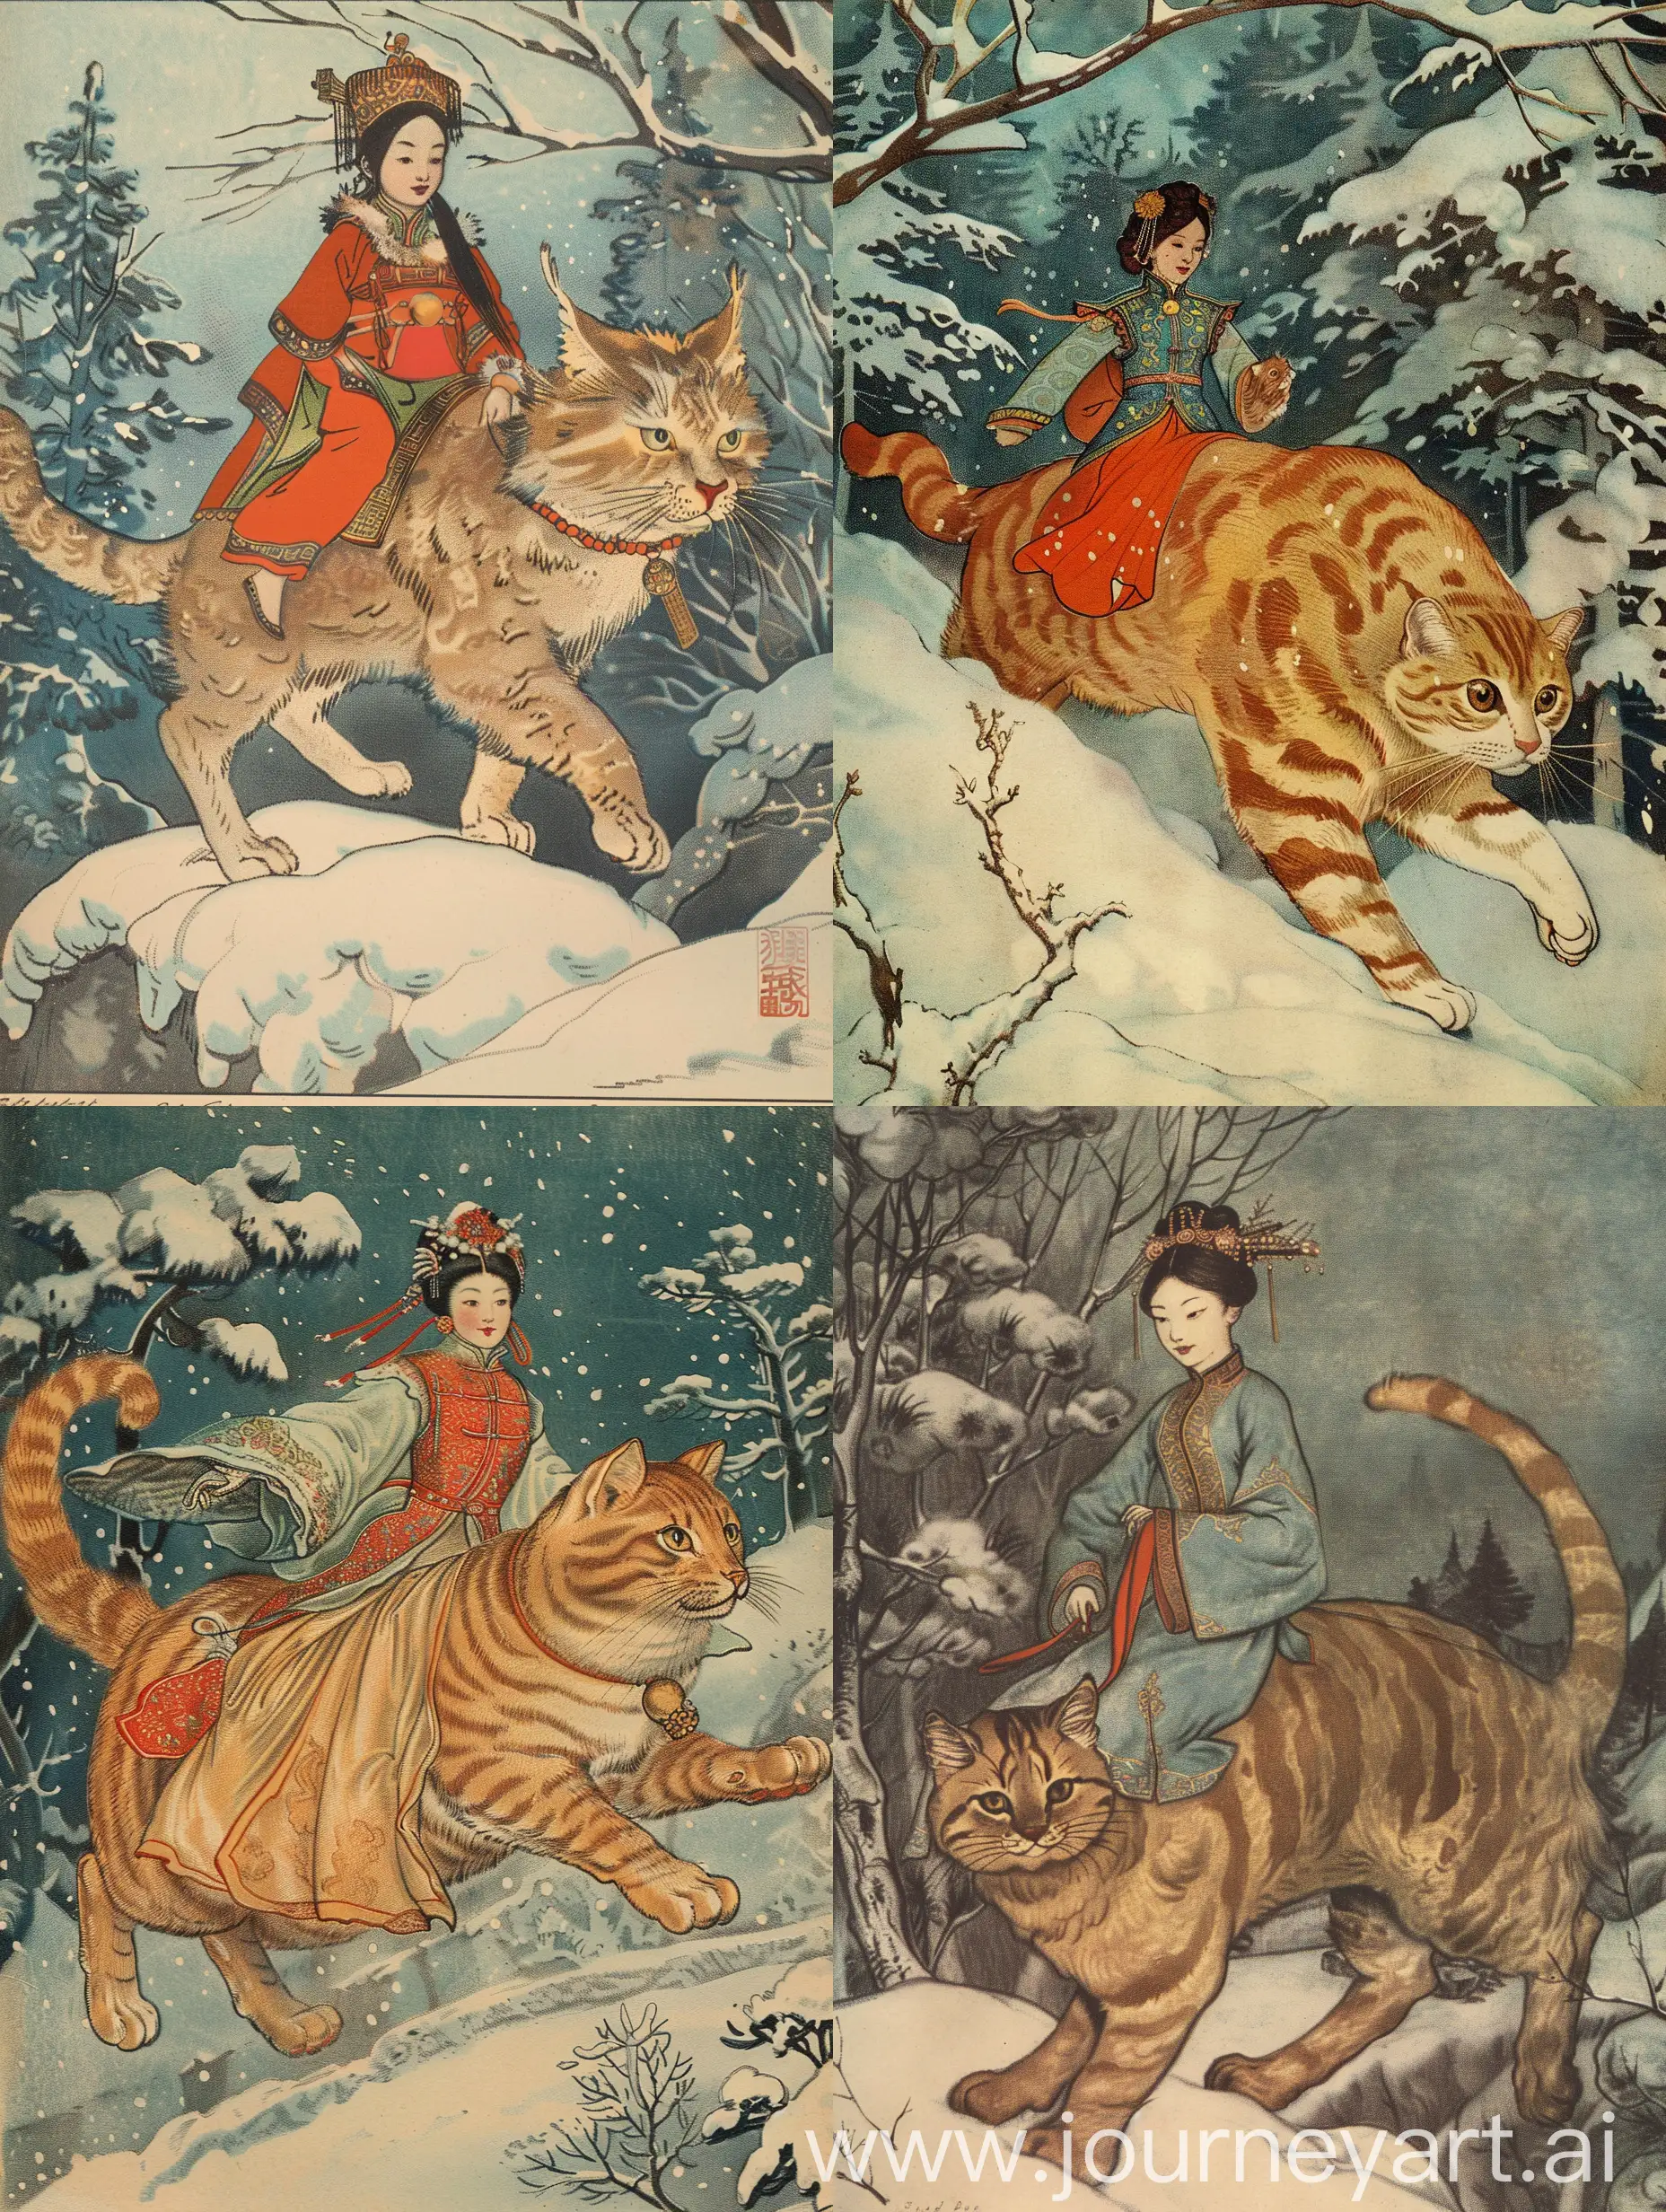 mandarin princess riding a giant cat in winter by Edmund Dulac